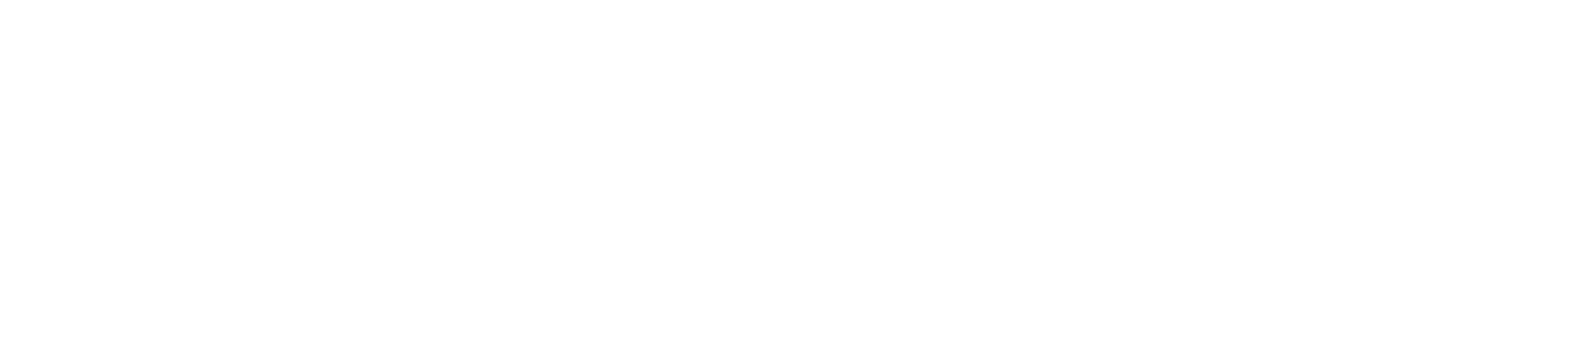 Synopsys logo grand pour les fonds sombres (PNG transparent)